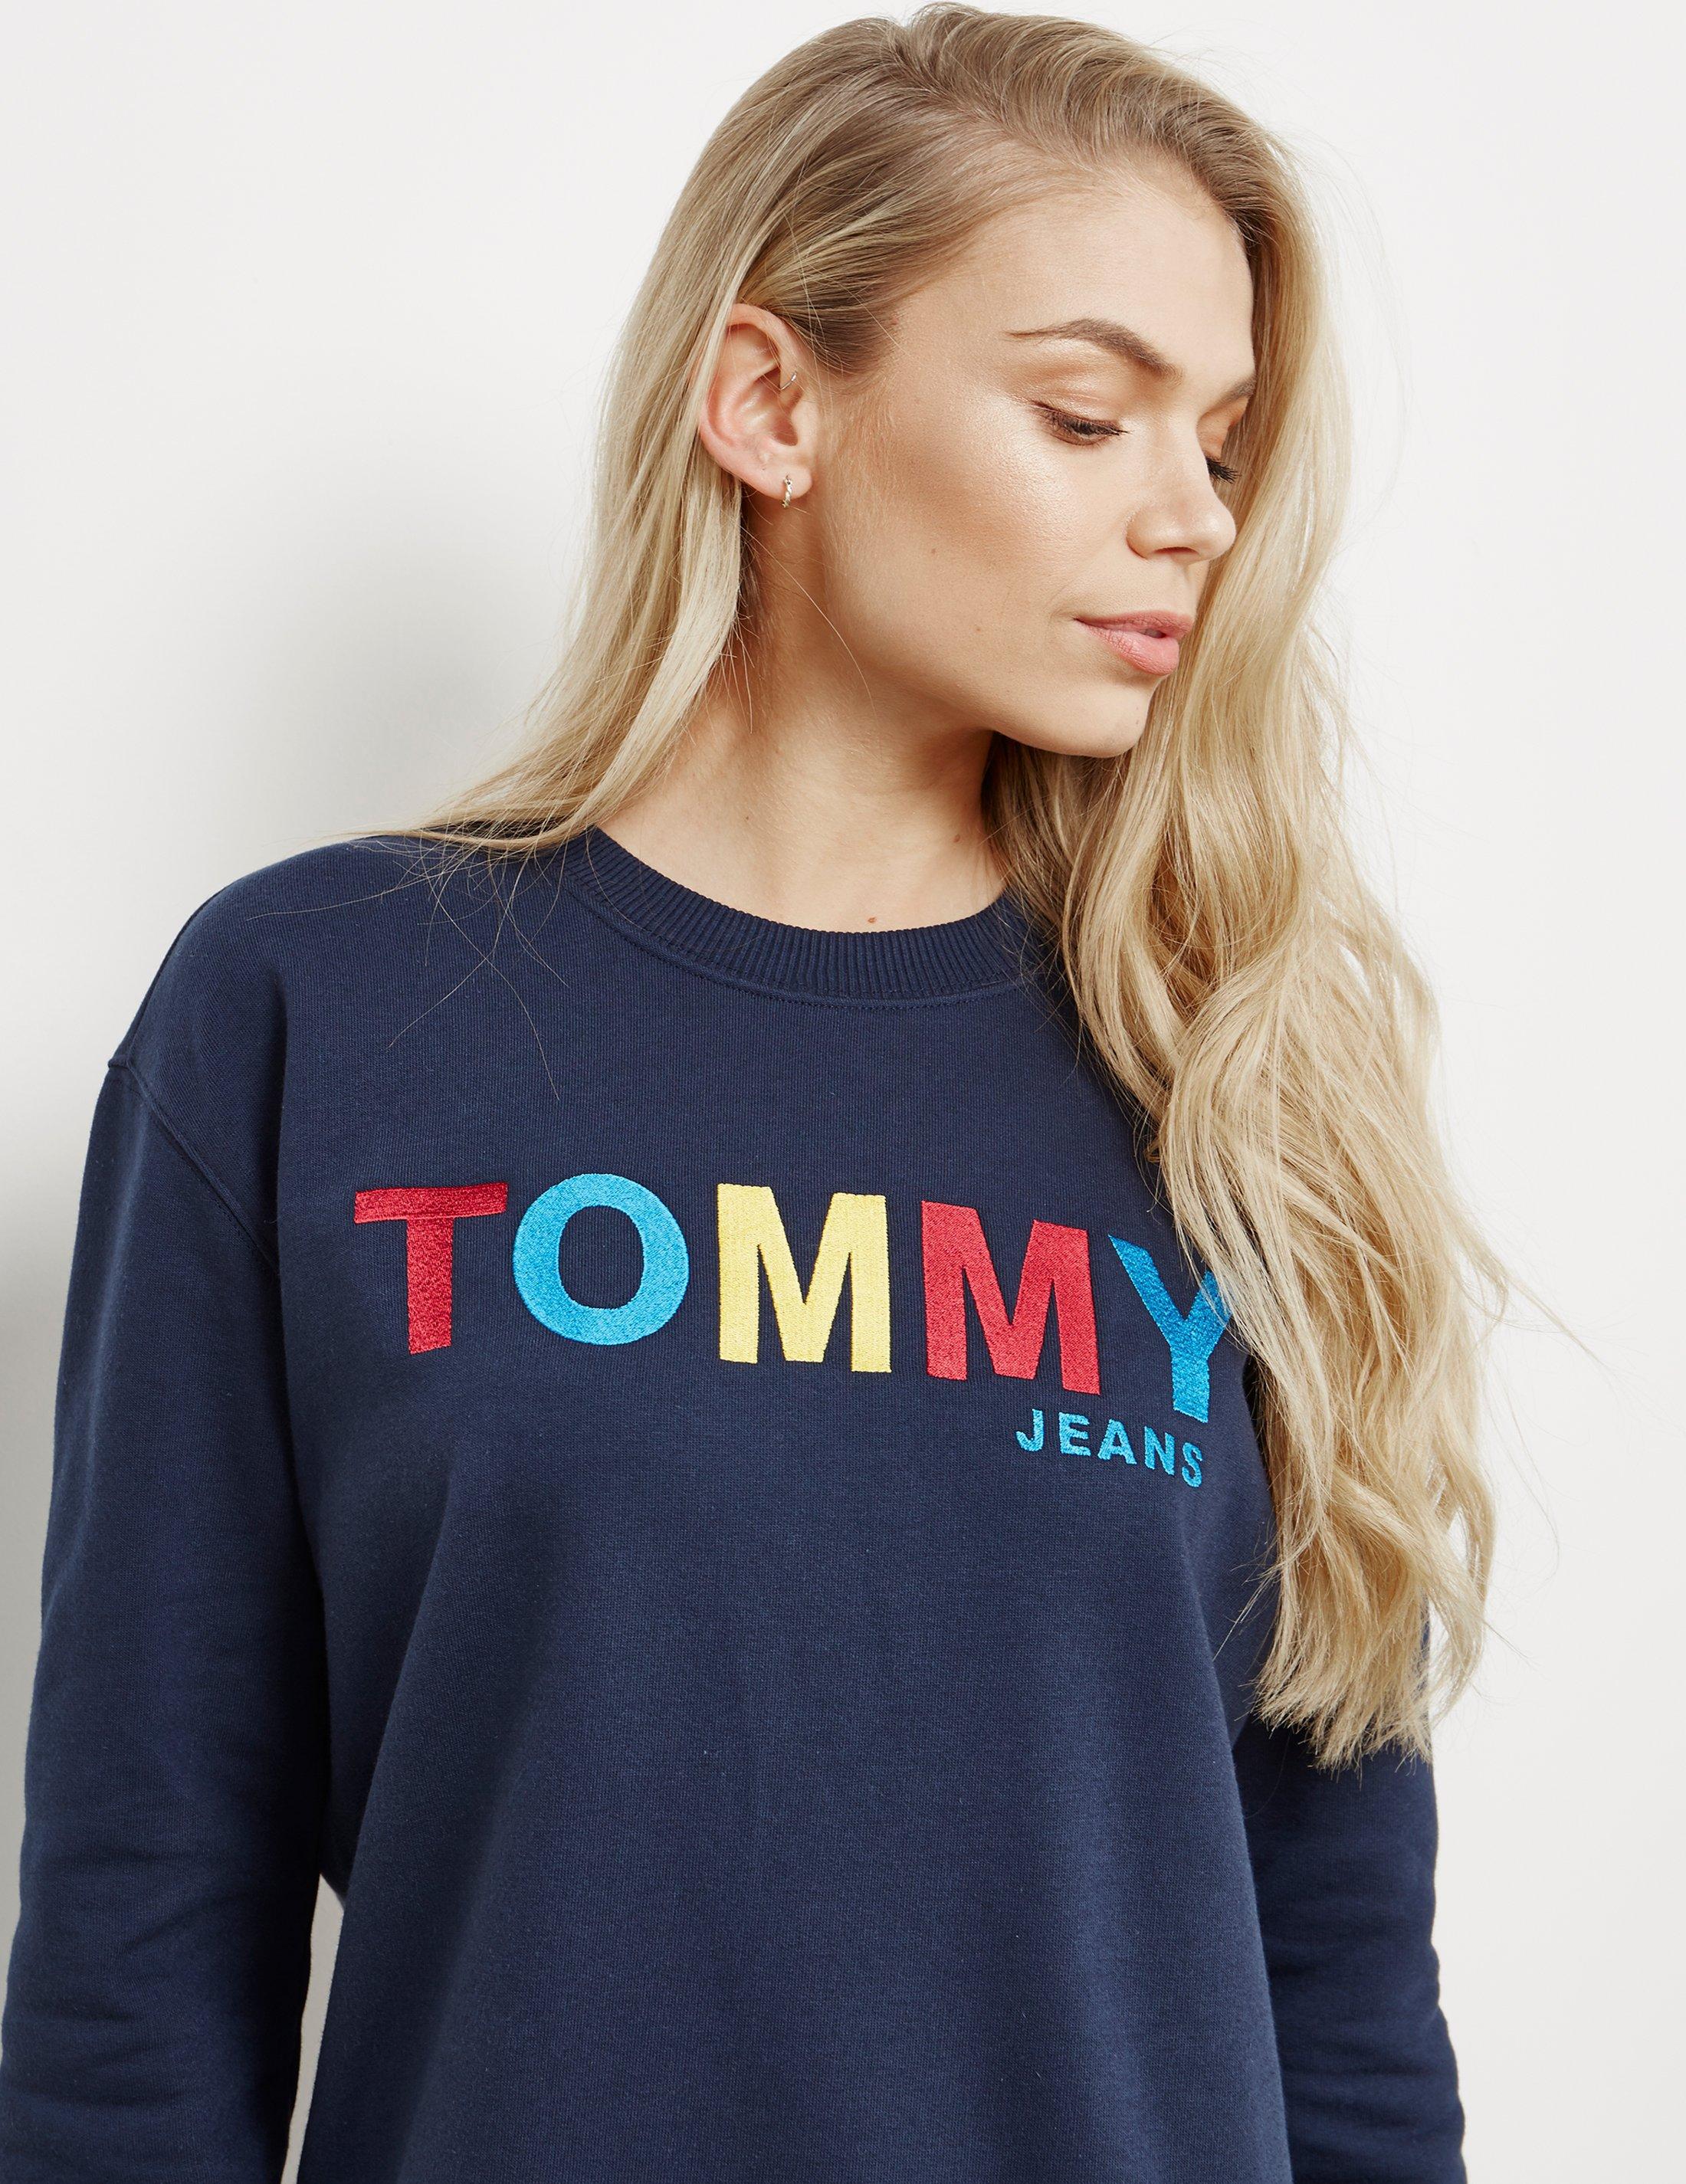 Tommy Hilfiger Denim Womens Sweatshirt Dress Navy Blue - Lyst